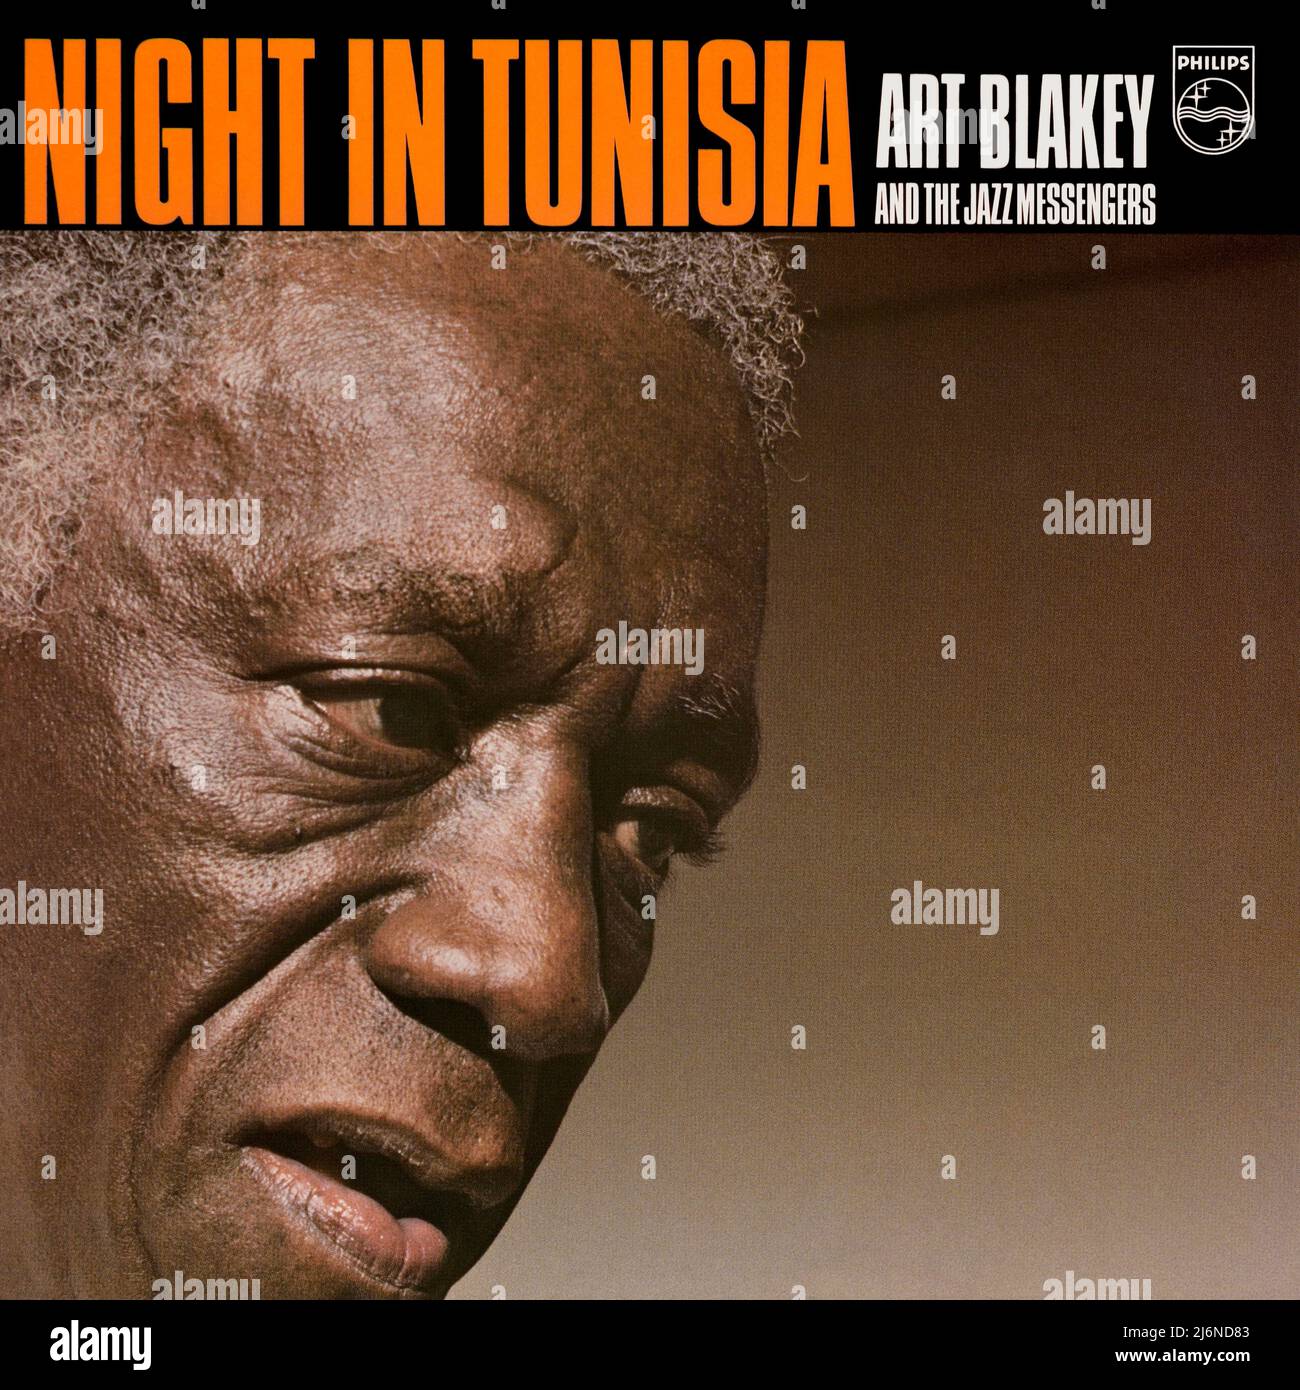 Art Blakey & The Jazz Messengers - original vinyl album cover - Night In Tunisia - Digital Session - 1979 Stock Photo